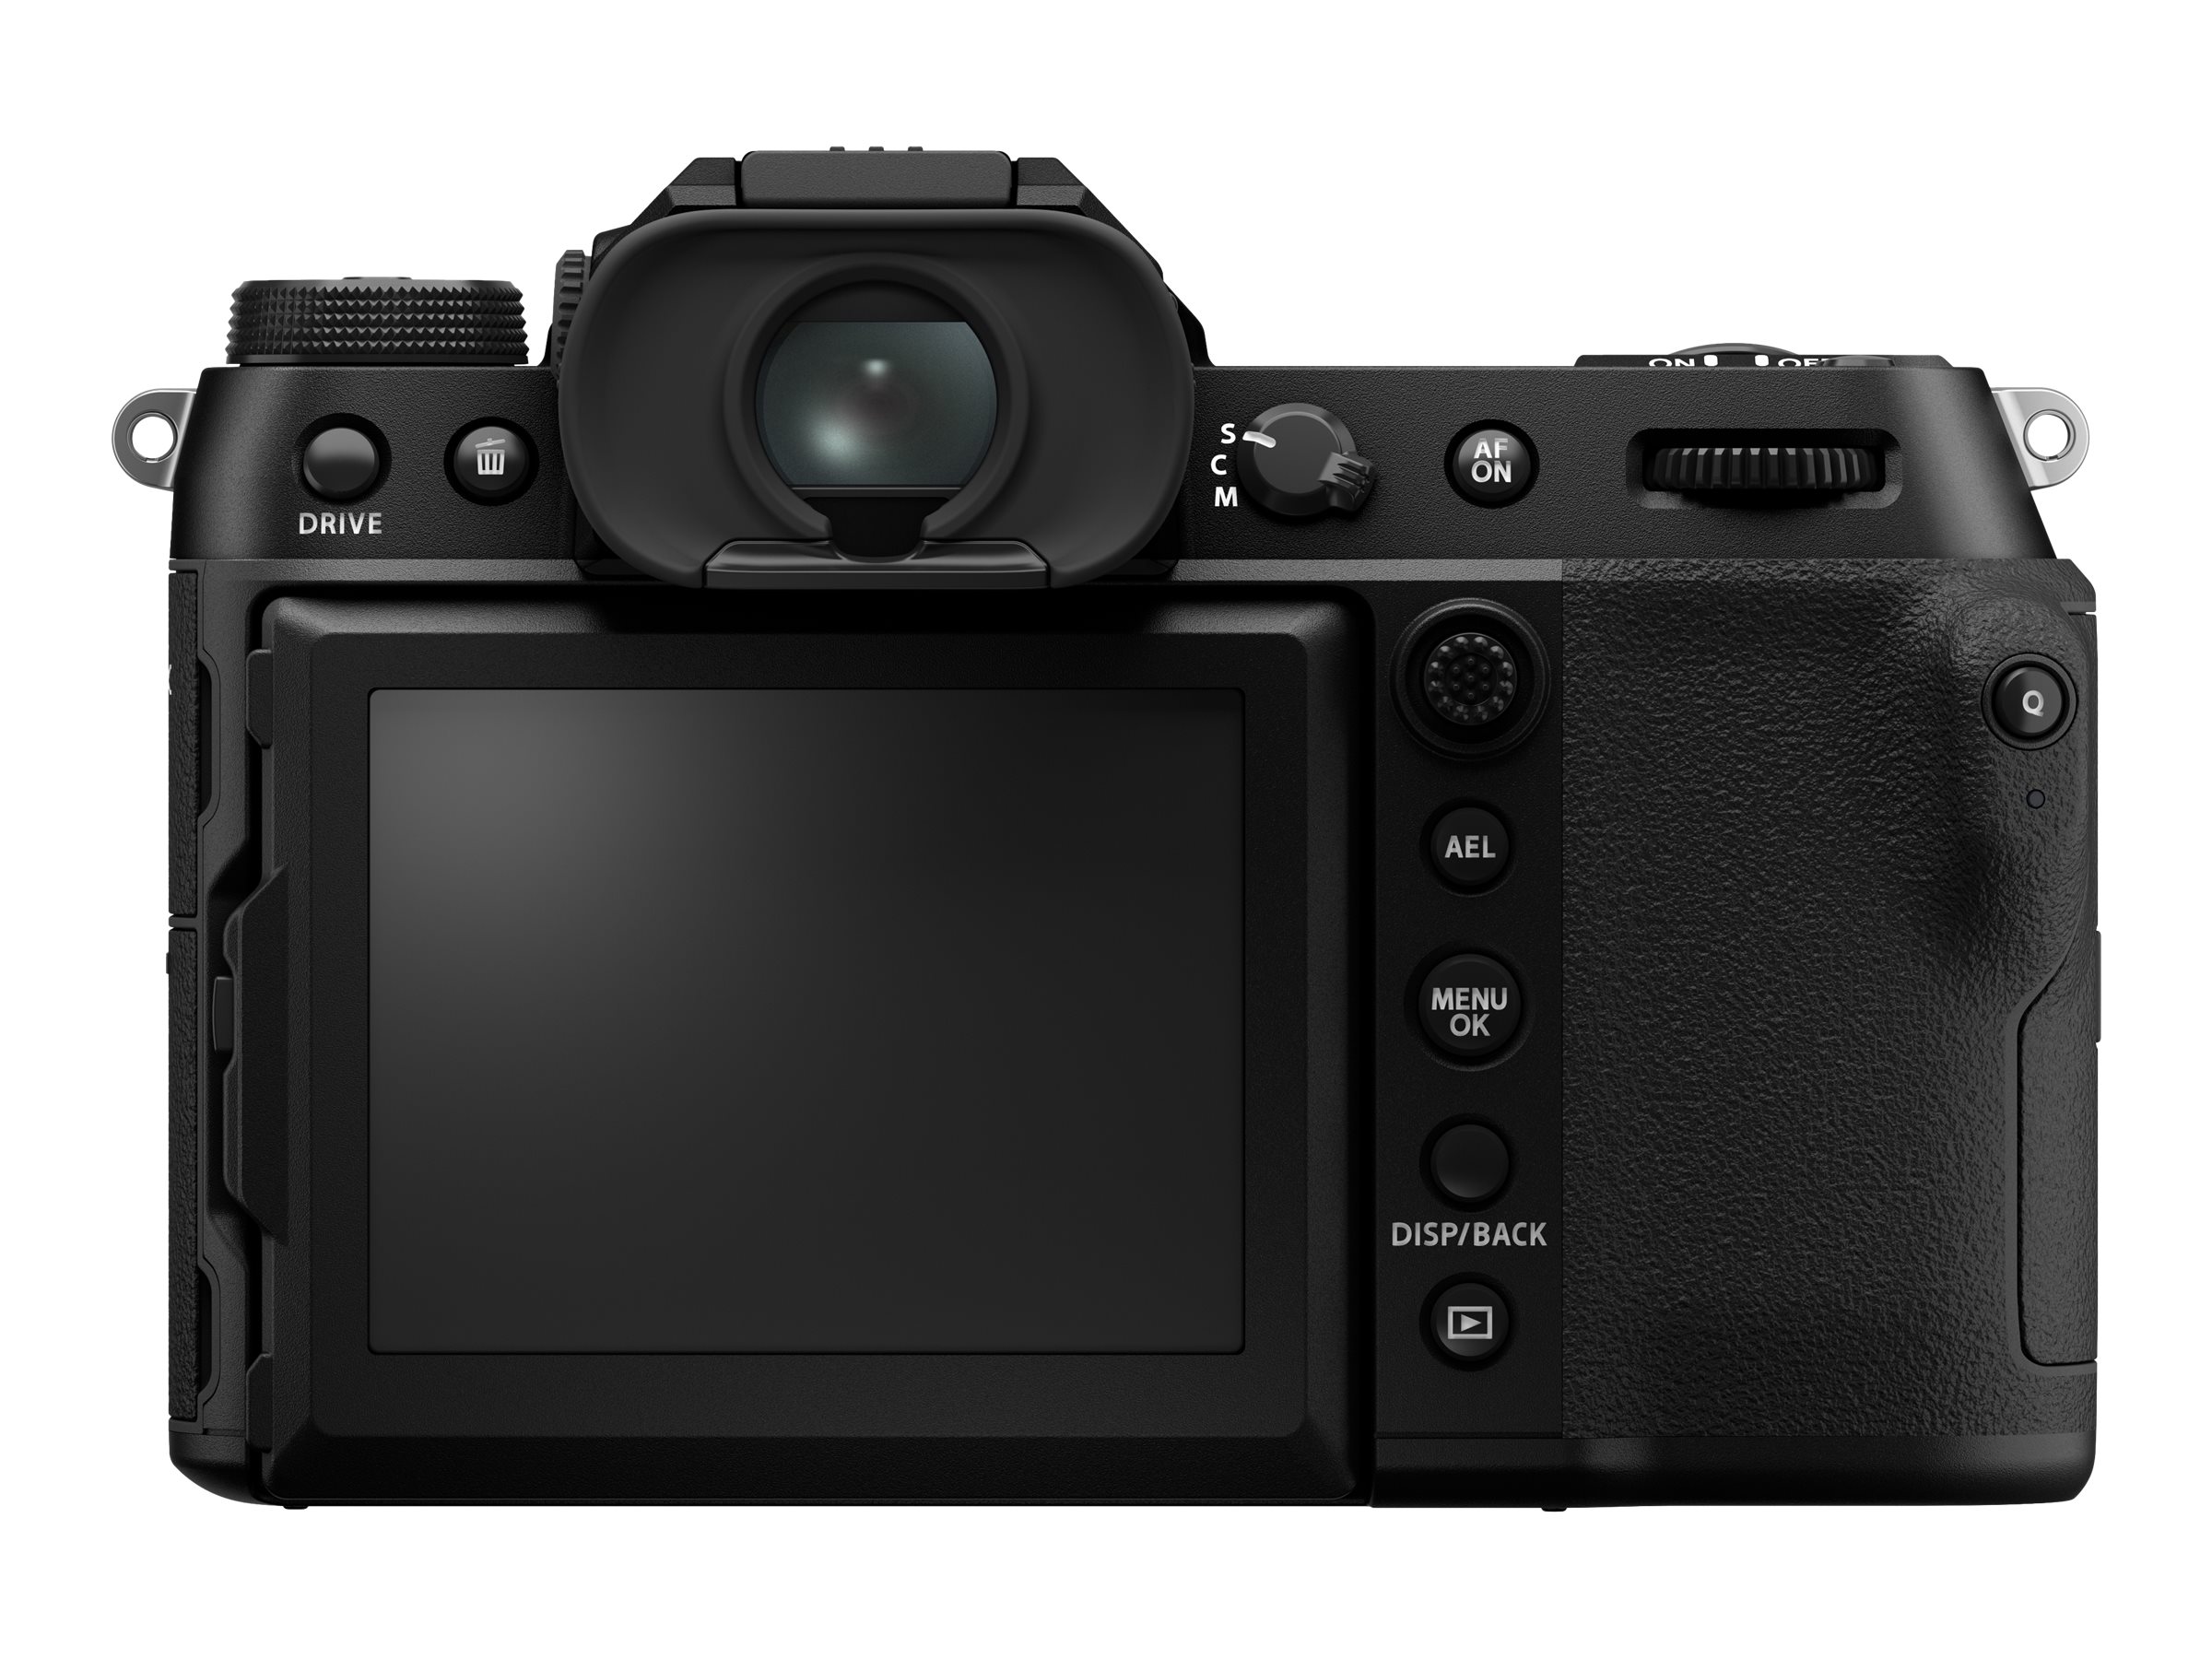 Fujifilm GFX 50S II Digital Mirrorless Camera - Black - 600022336